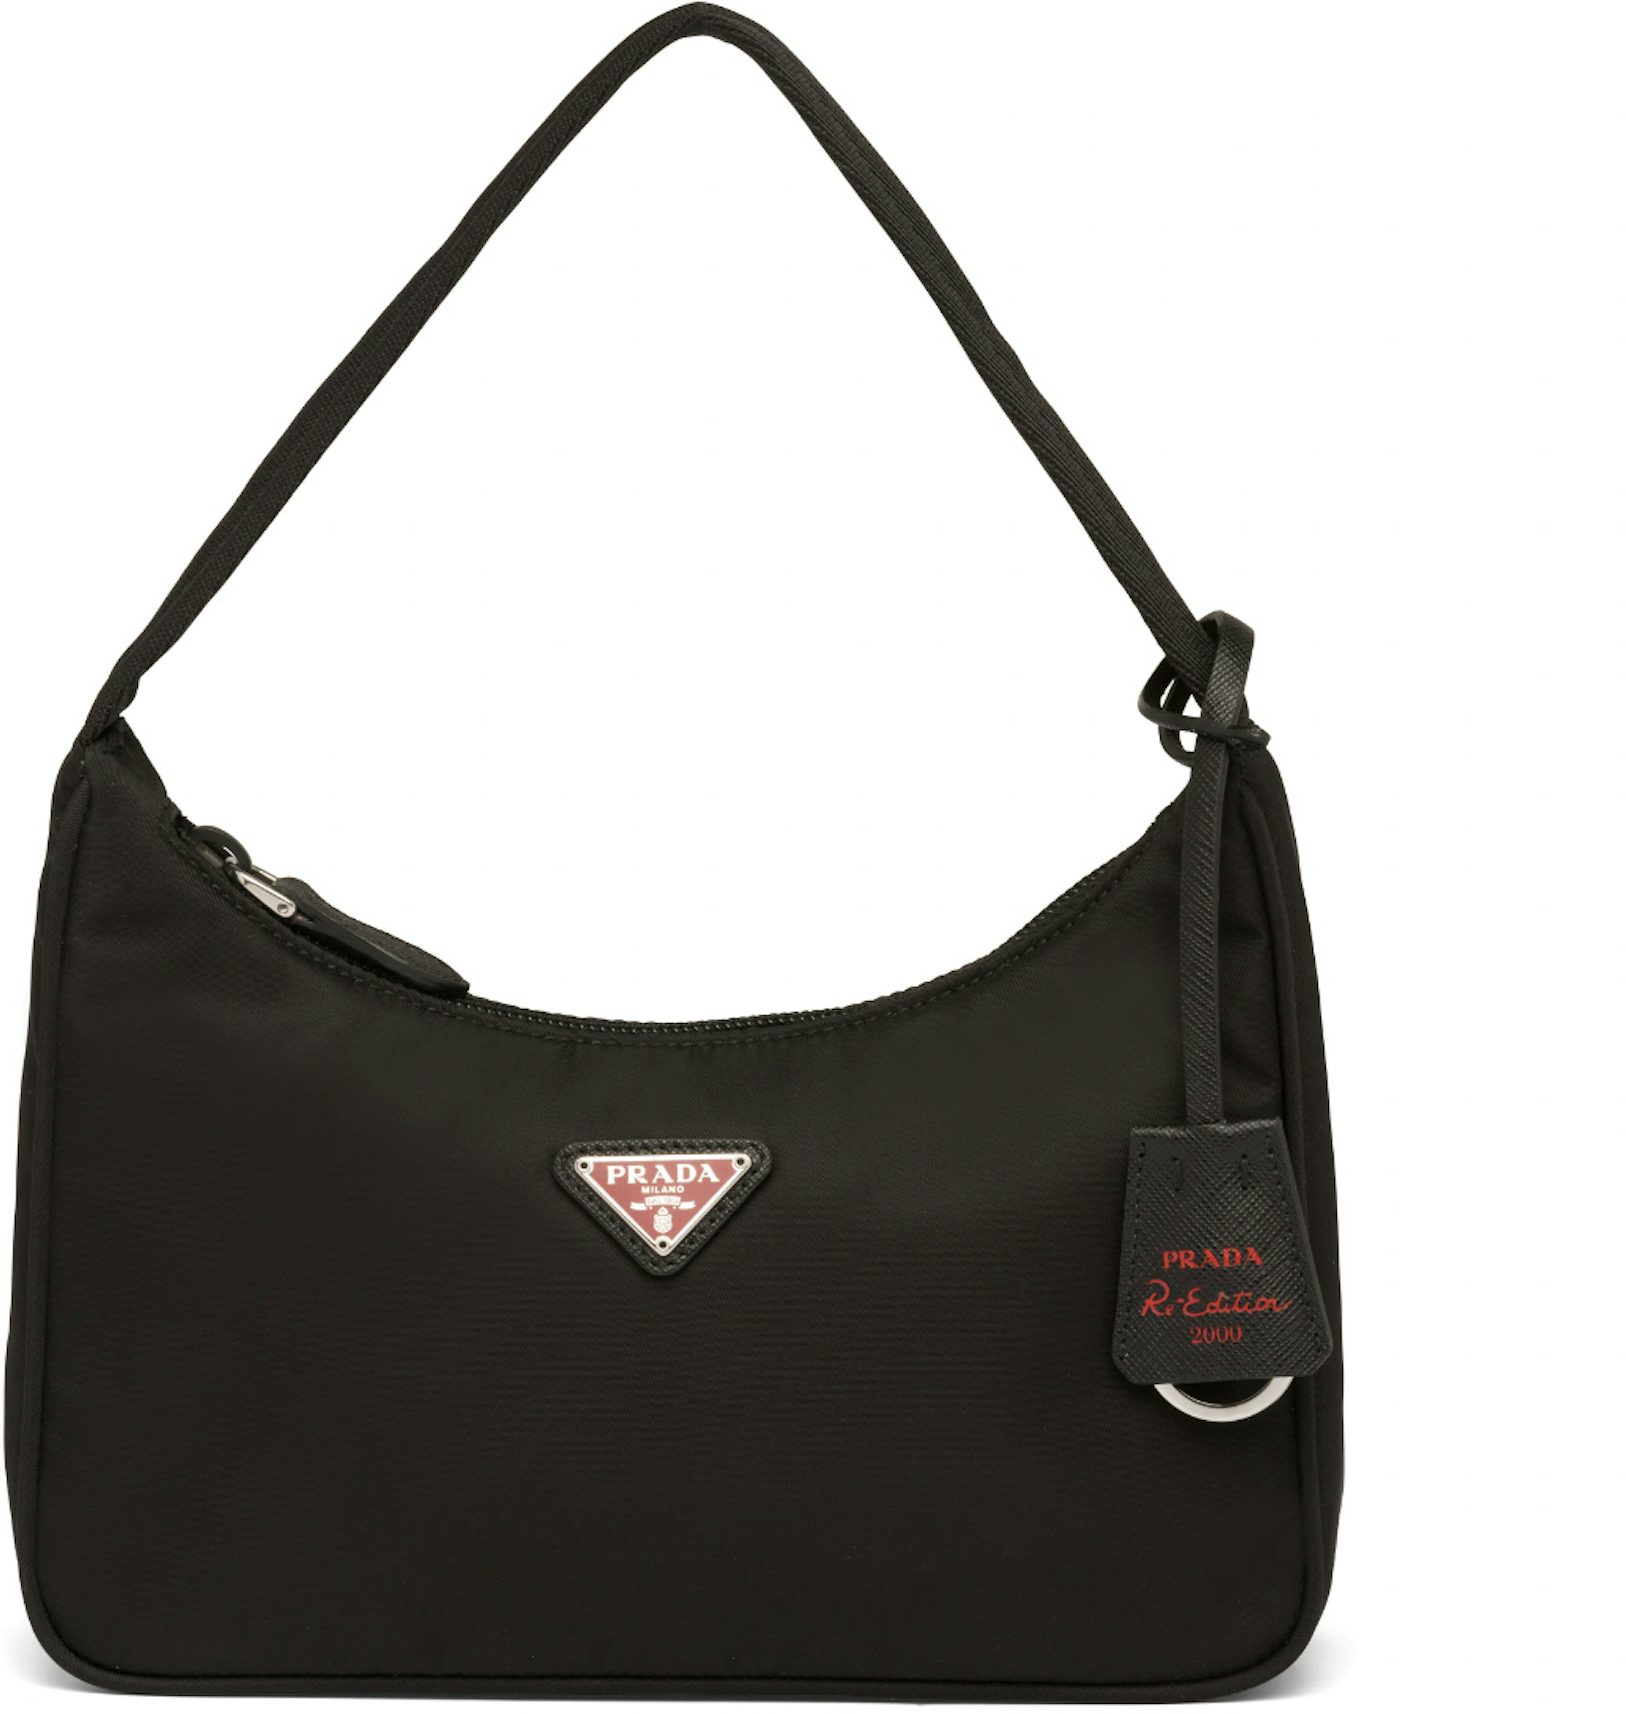 Re-Nylon Prada Re-Edition 2000 Mini-Bag